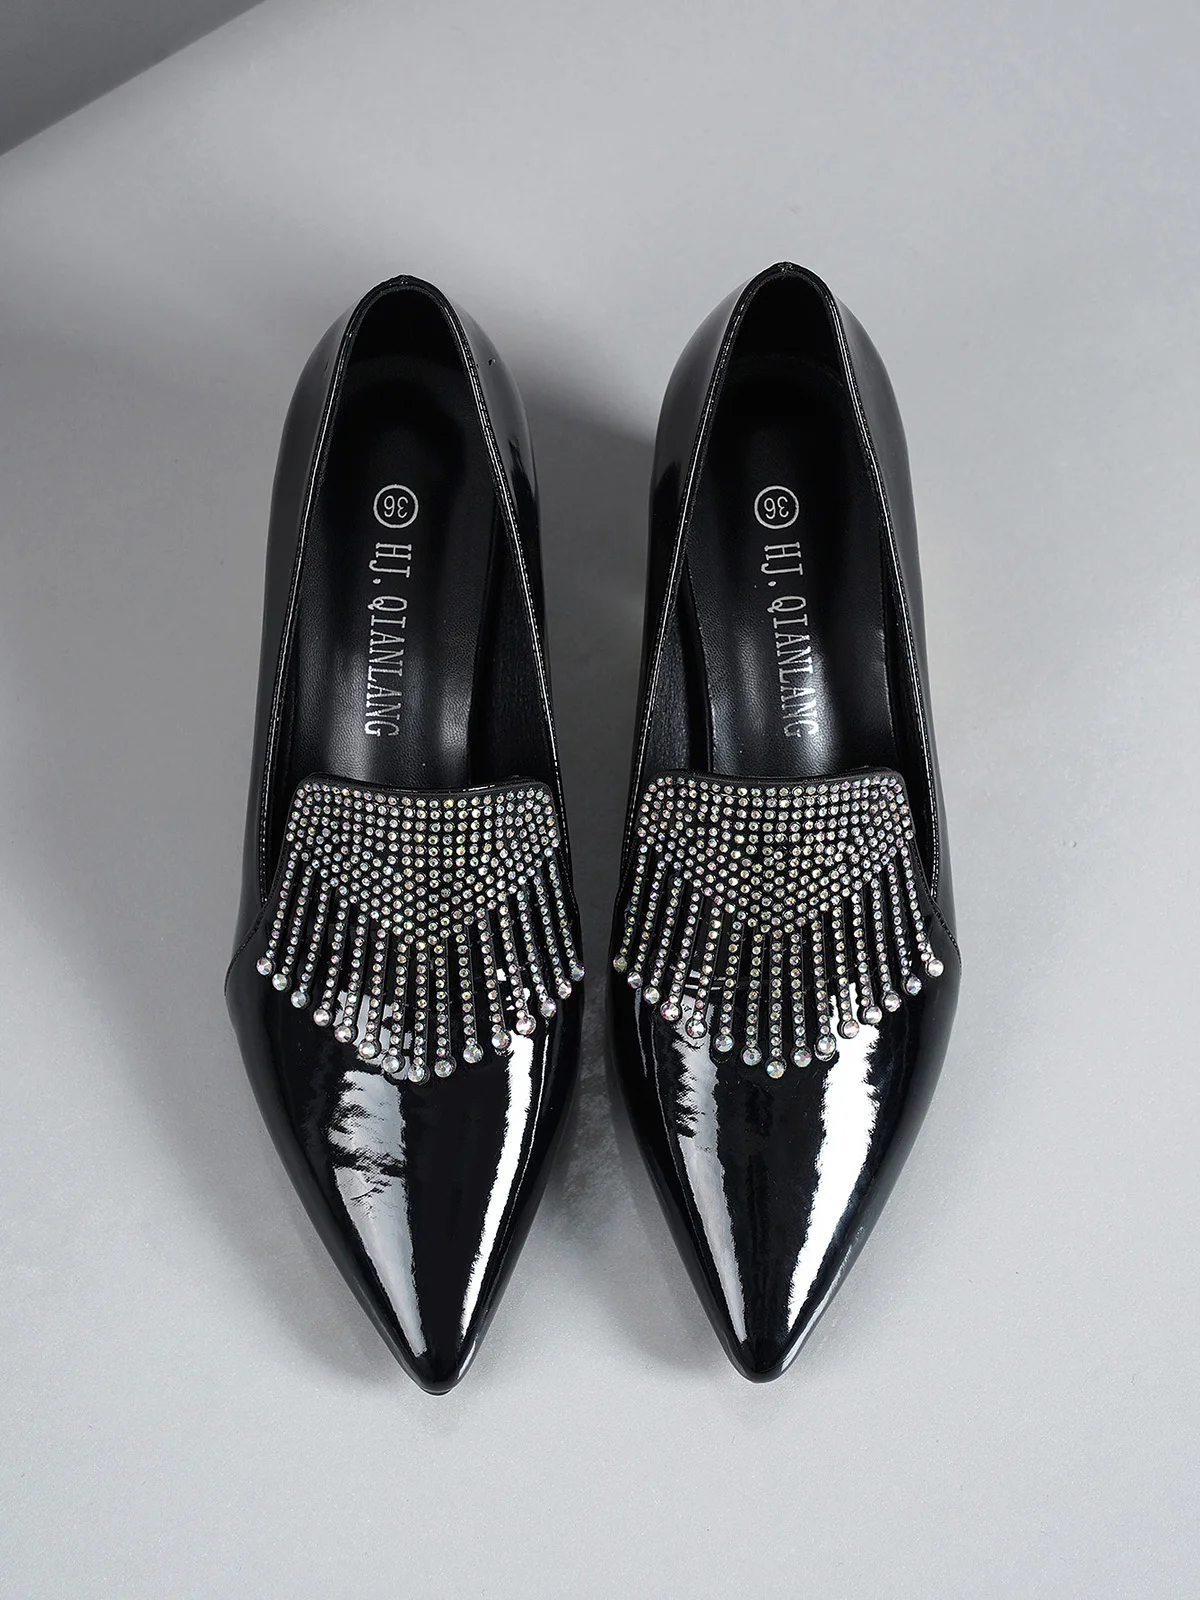 Rhinestone Patent Leather Pumps Spool Heel Dress Shoes | stylewe